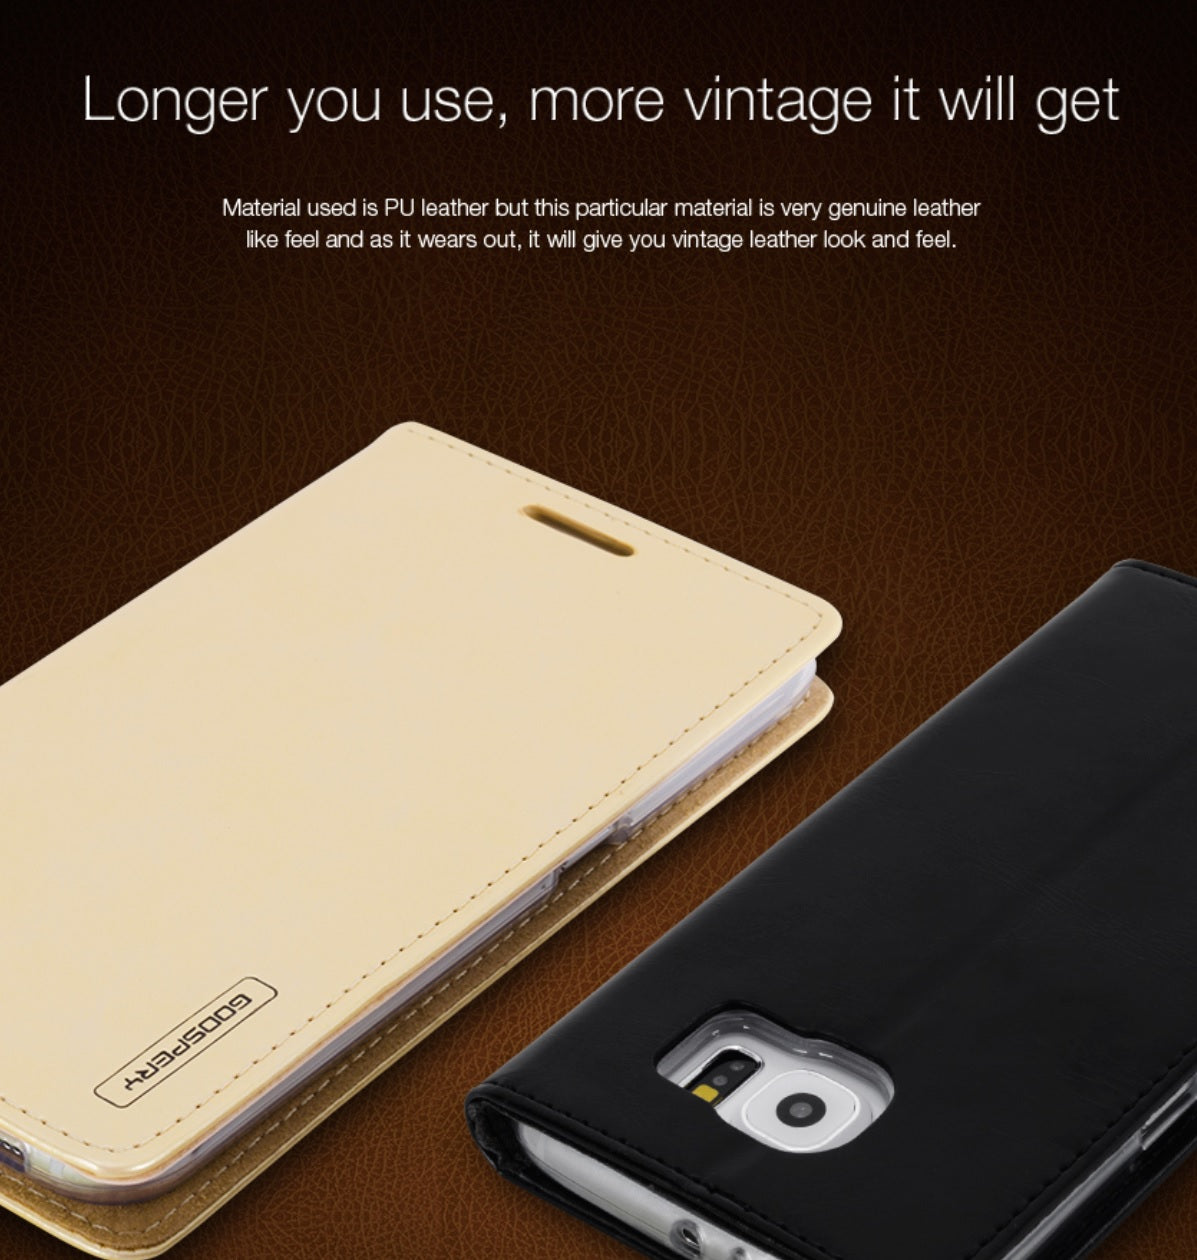 Samsung Note 9 Mercury Goospery Bluemoon Flip Stand Case Silicone Gel Cover